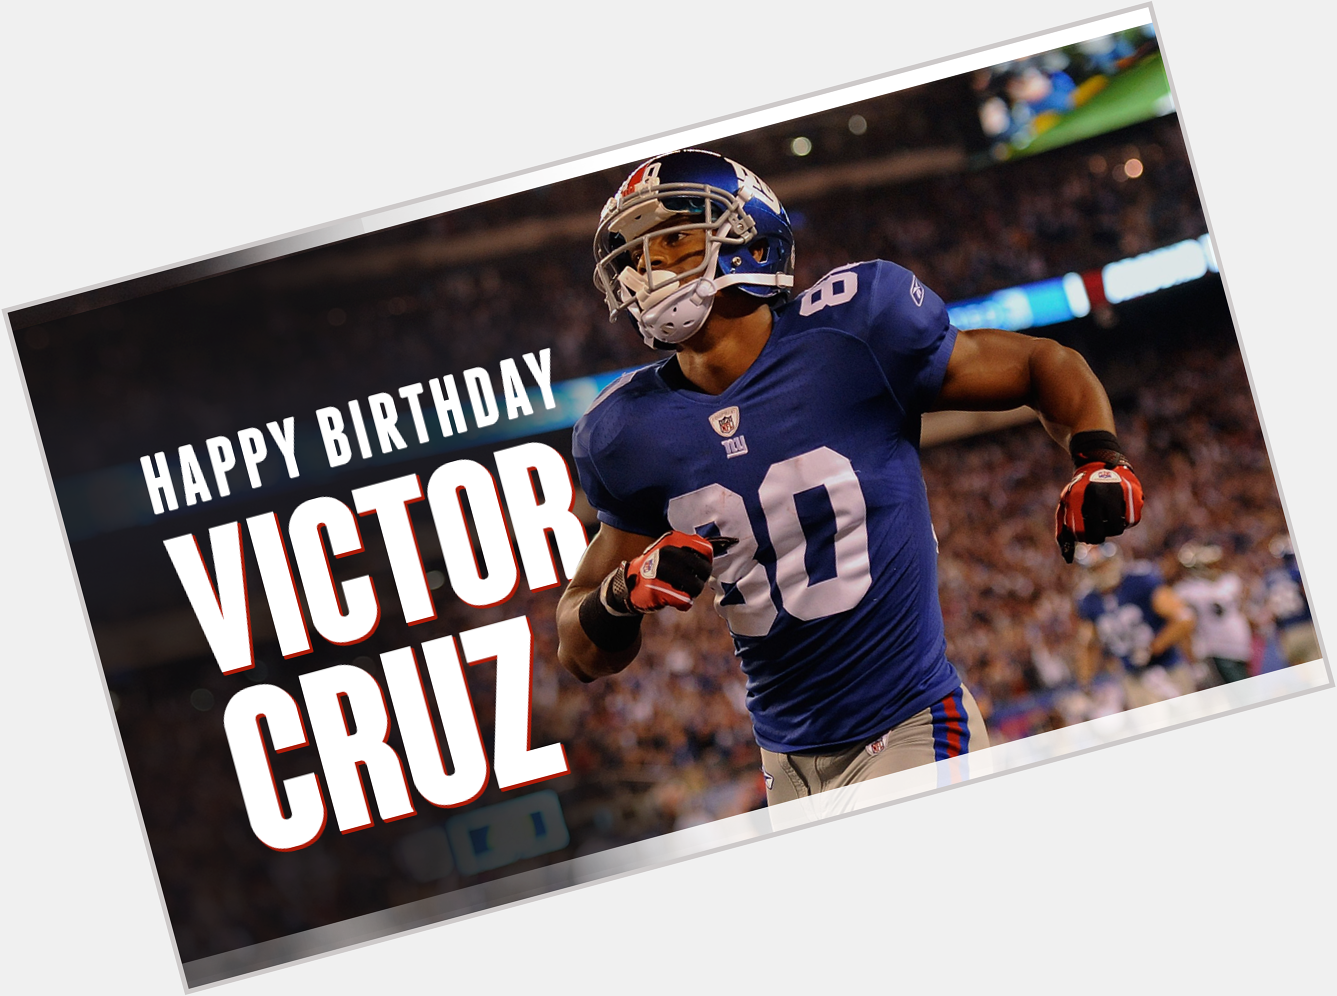 Happy Birthday Victor Cruz 